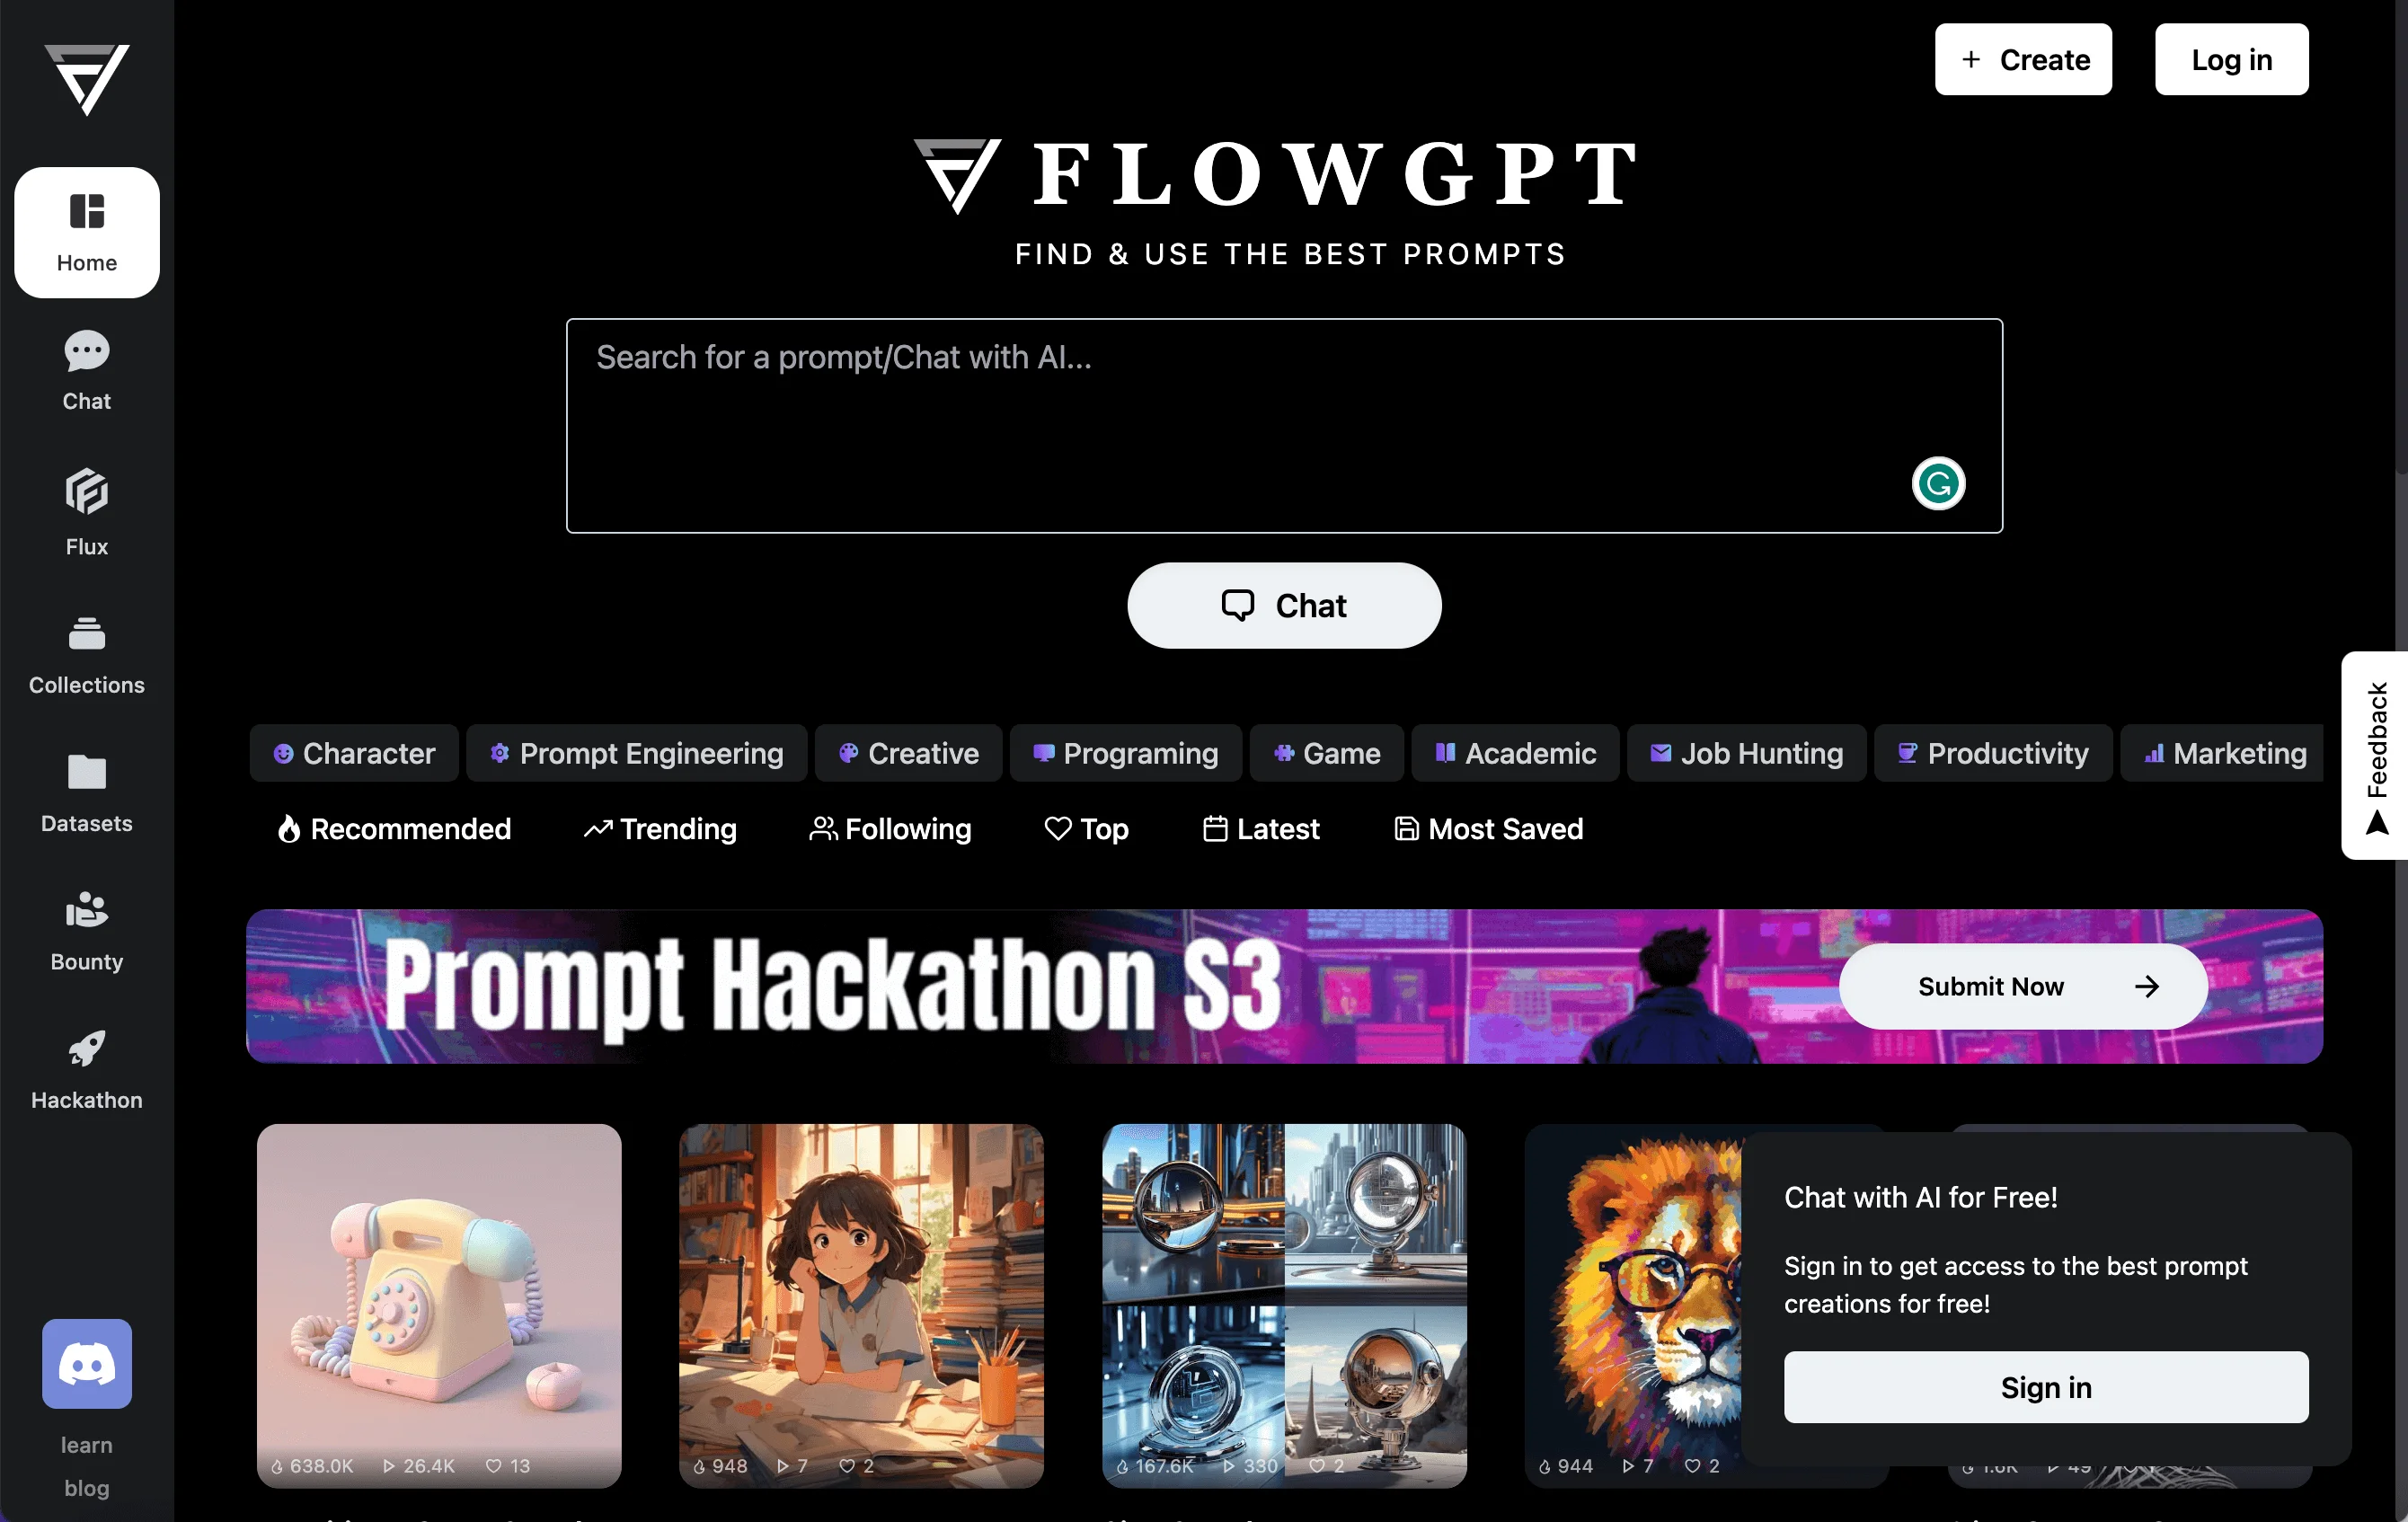 FLOWGPTwebsite picture